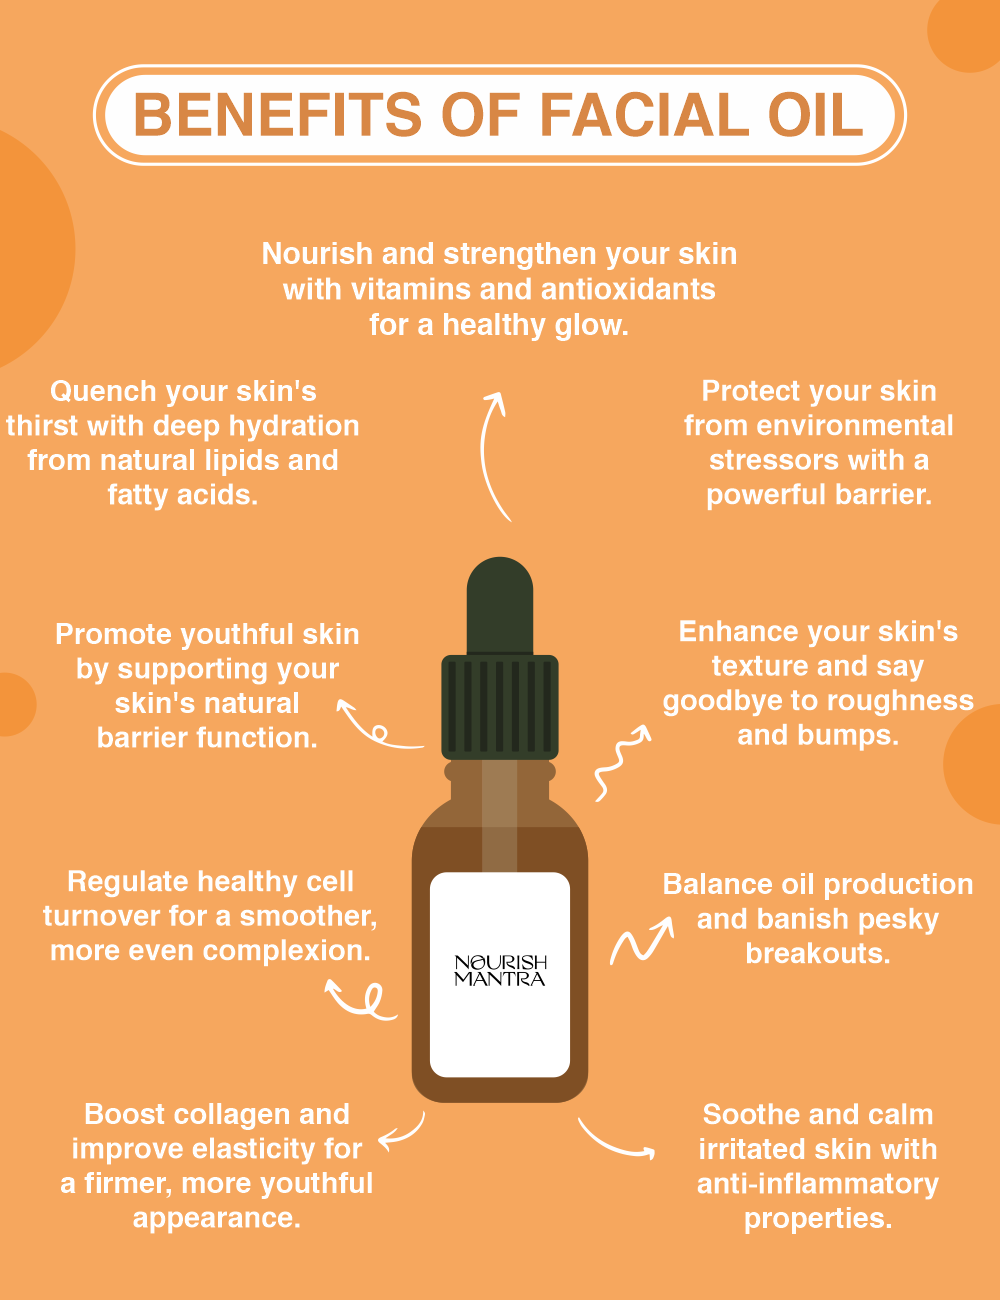 Benefits of facial oil